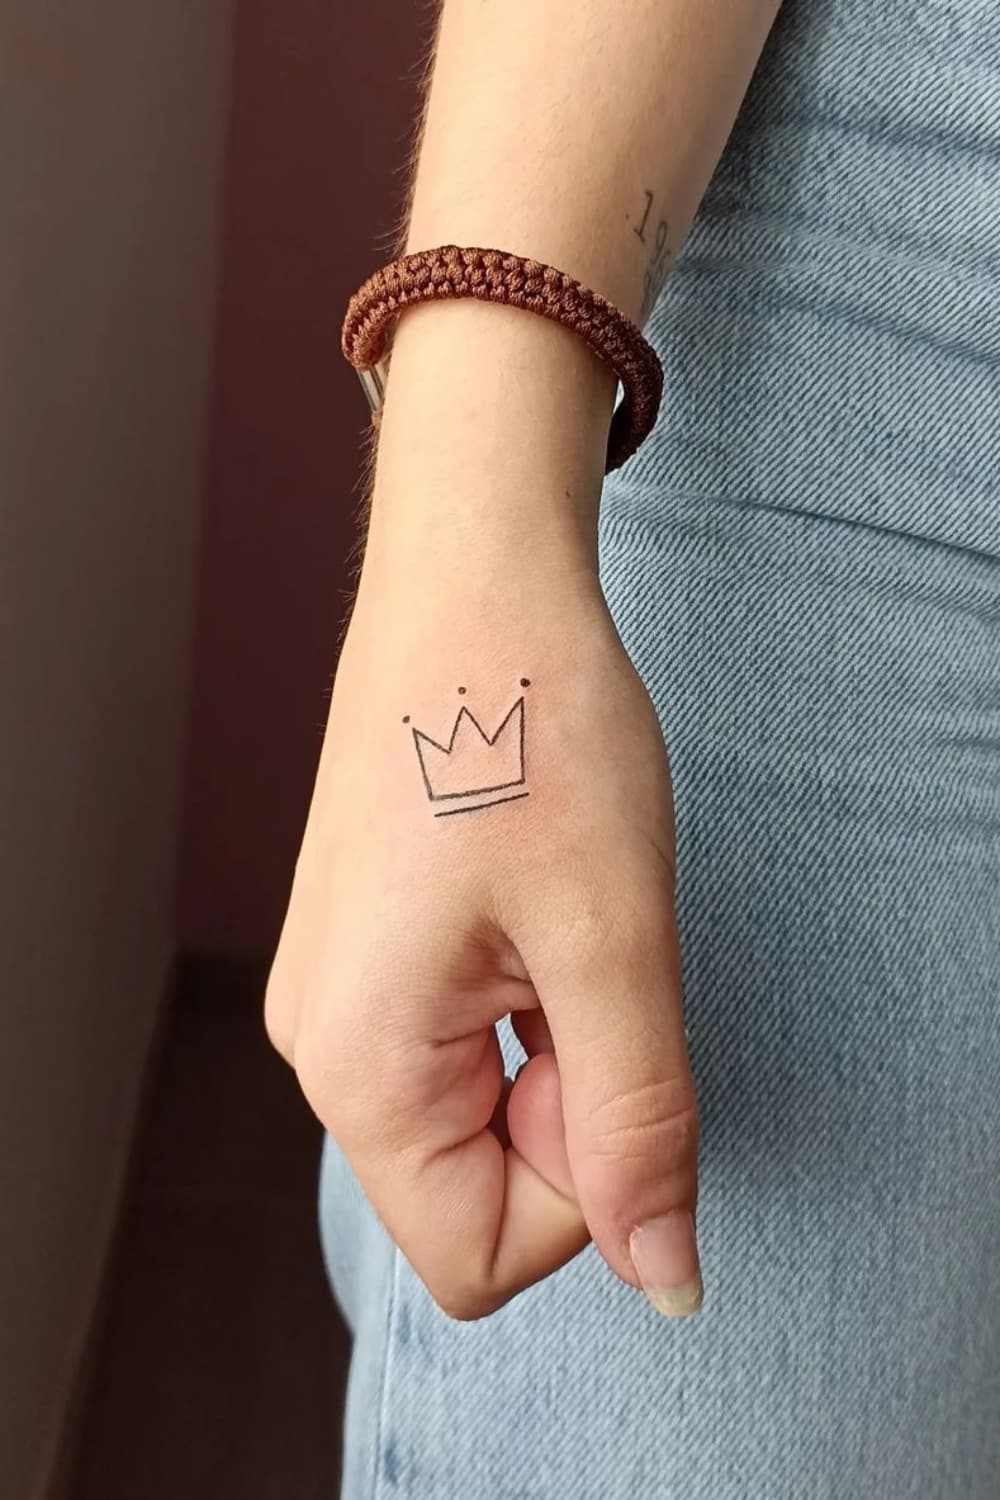 Crown Tattoo on Hand